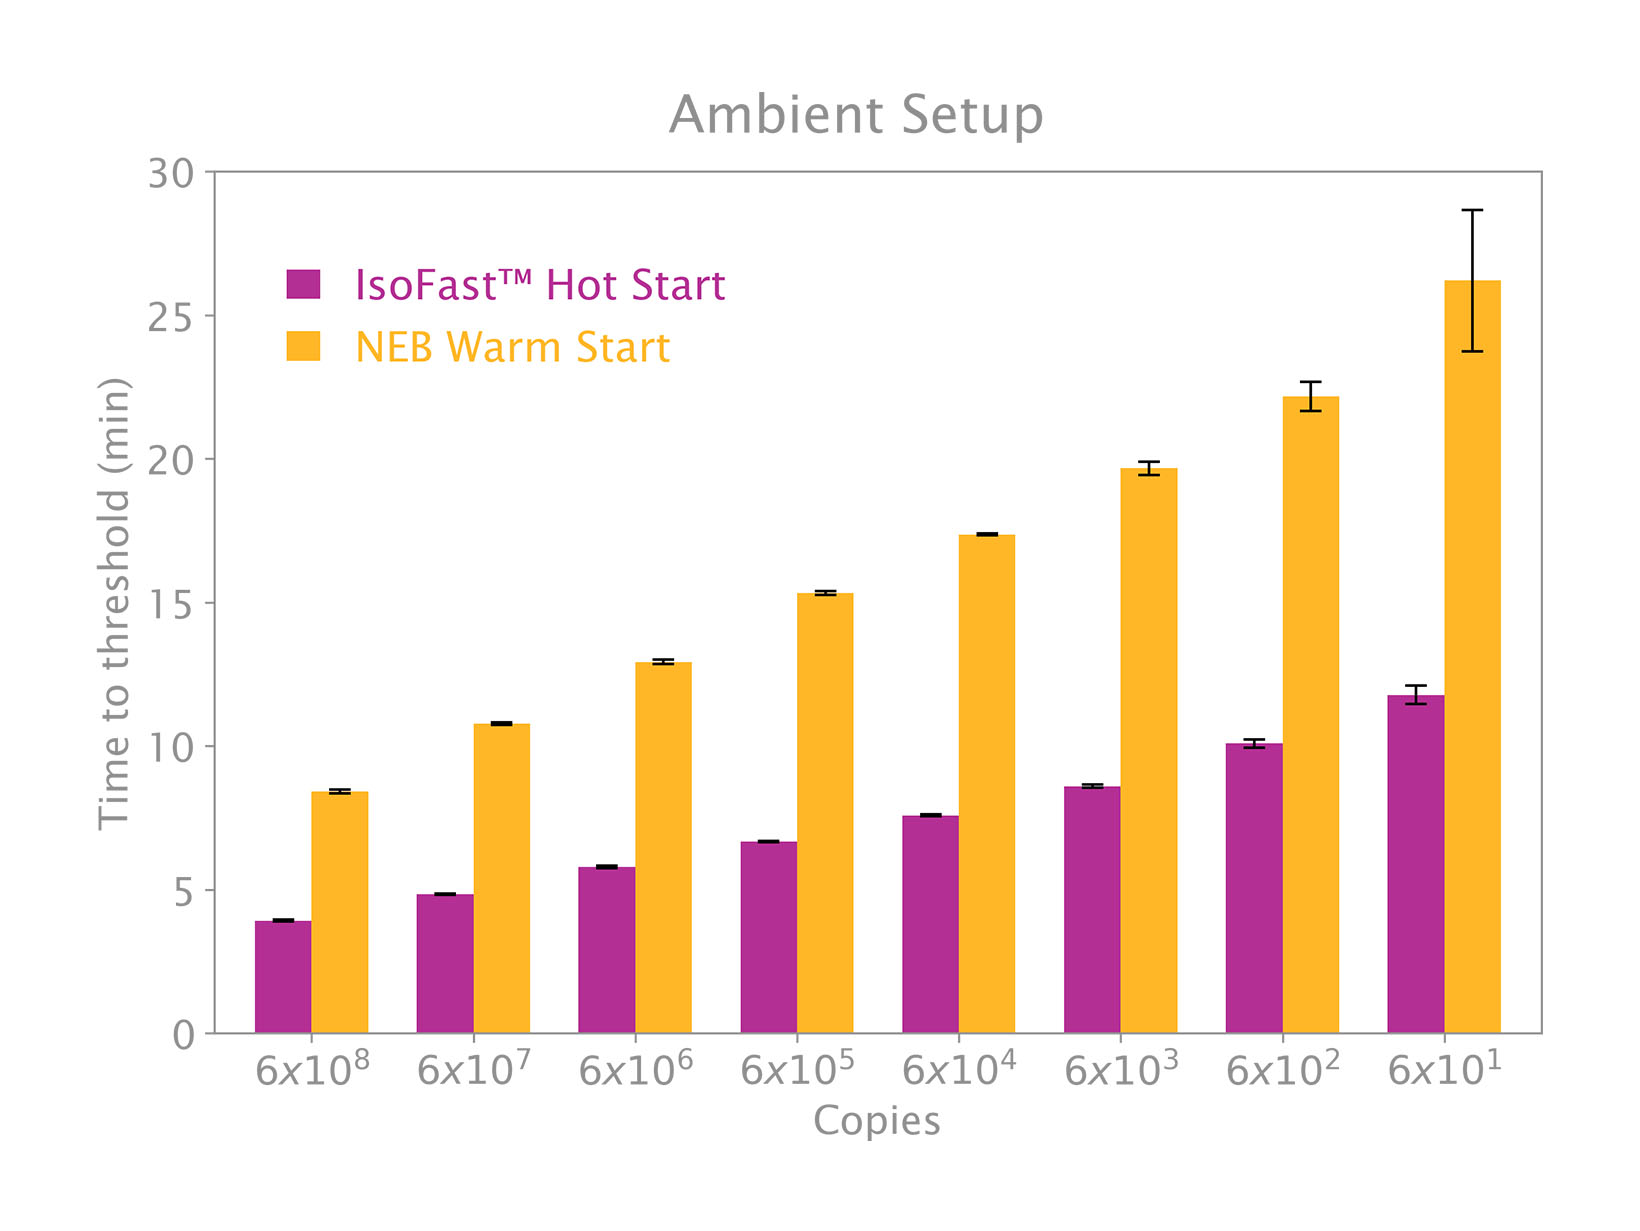 IsoFast Hot Start vs NEB Warmstart time to result under ambient setup